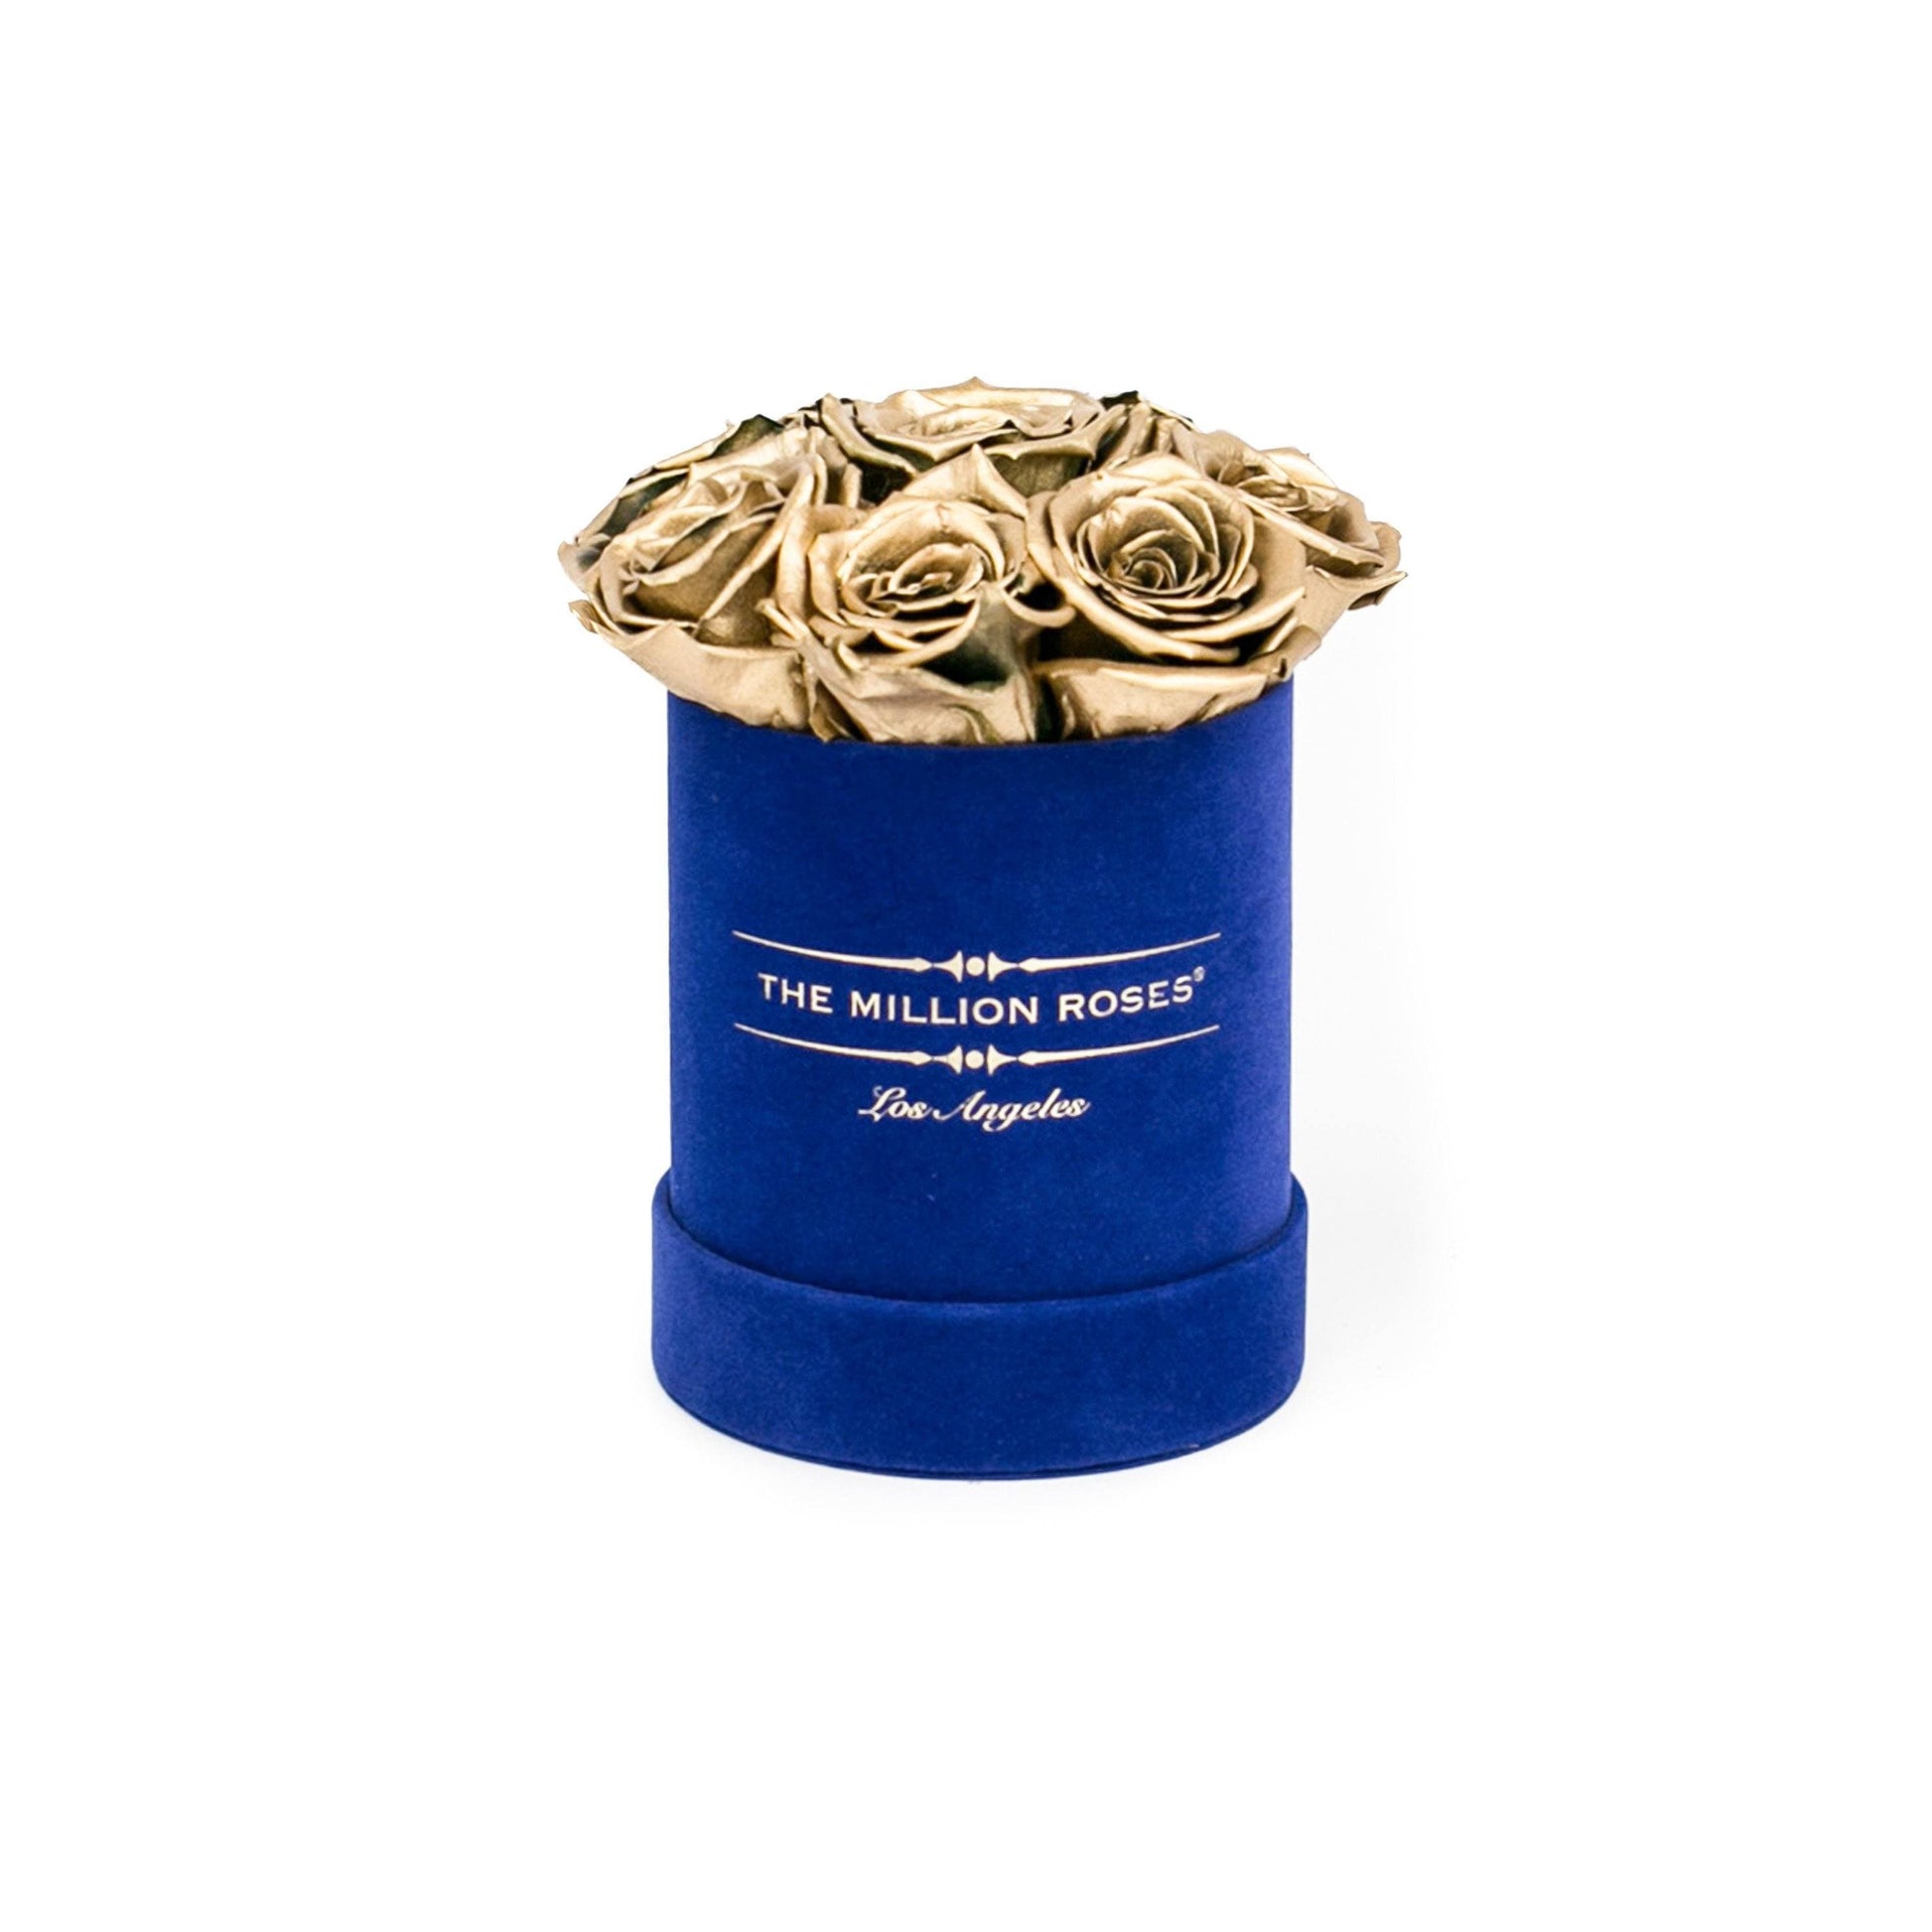 Basic Royal Blue Box | Gold Roses - The Million Roses